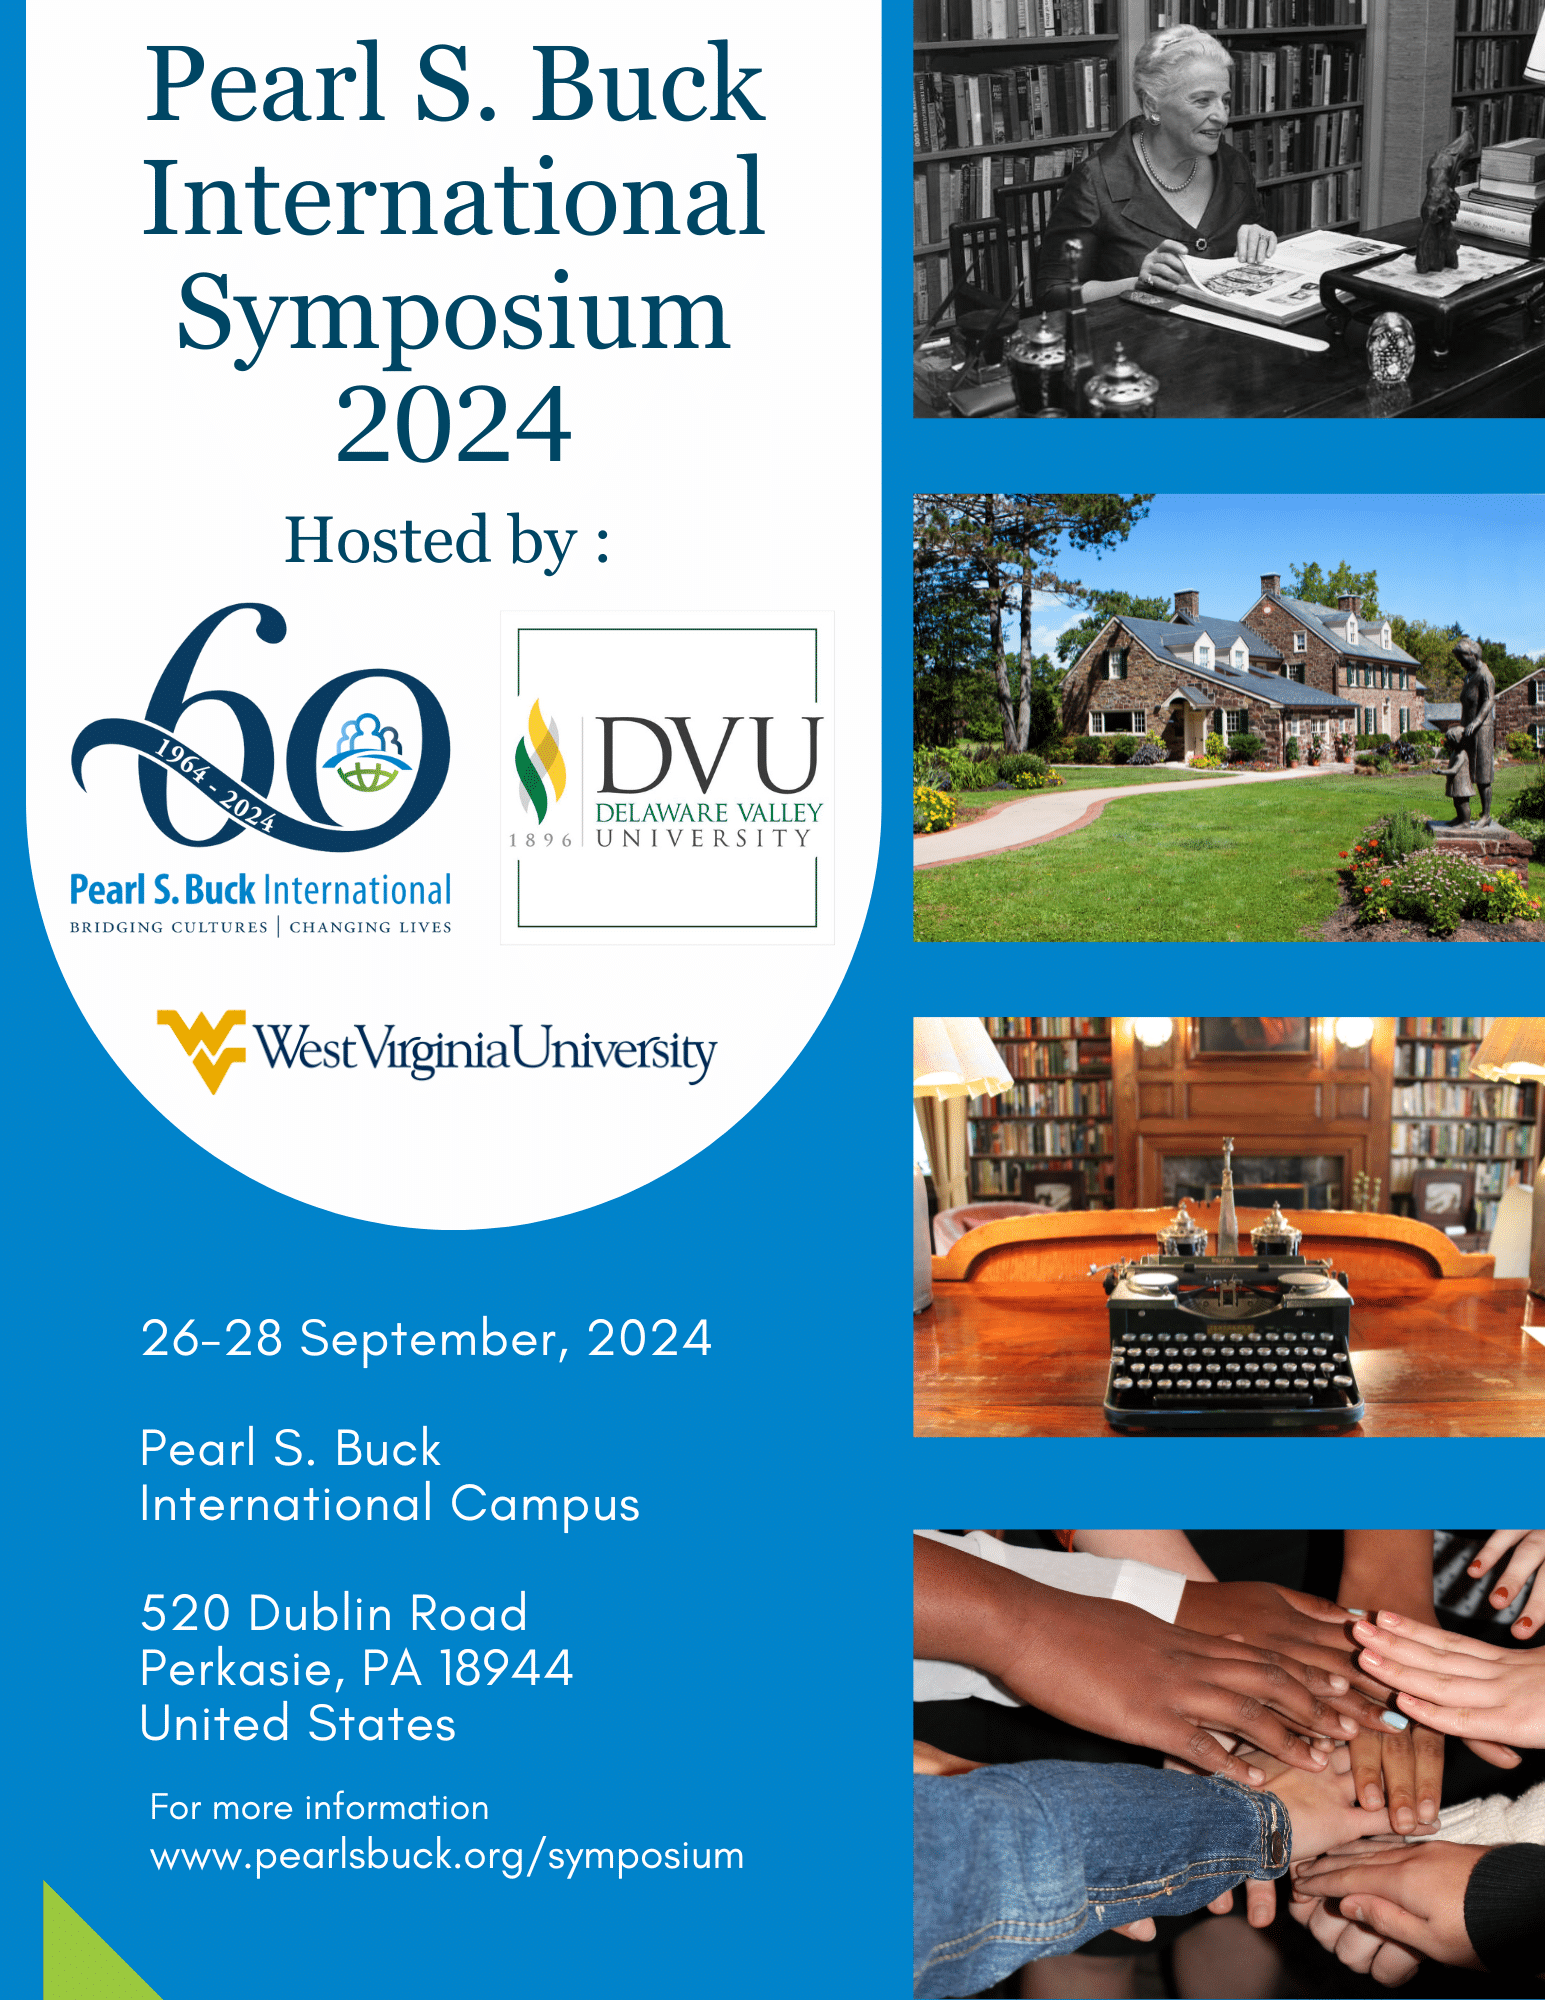 Pearl S. Buck International Symposium